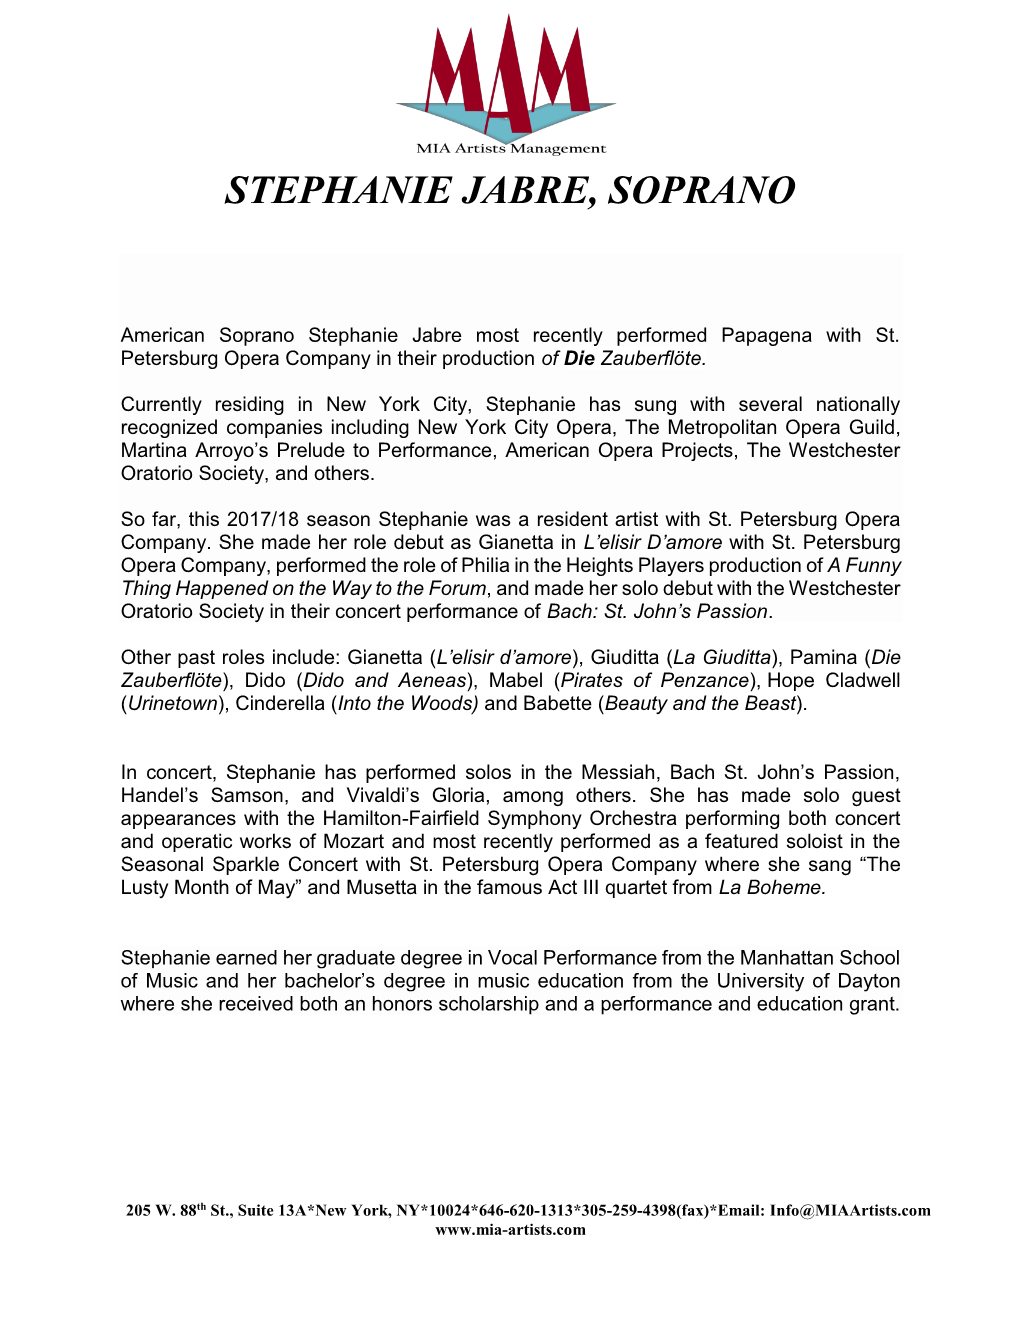 Stephanie Jabre, Soprano